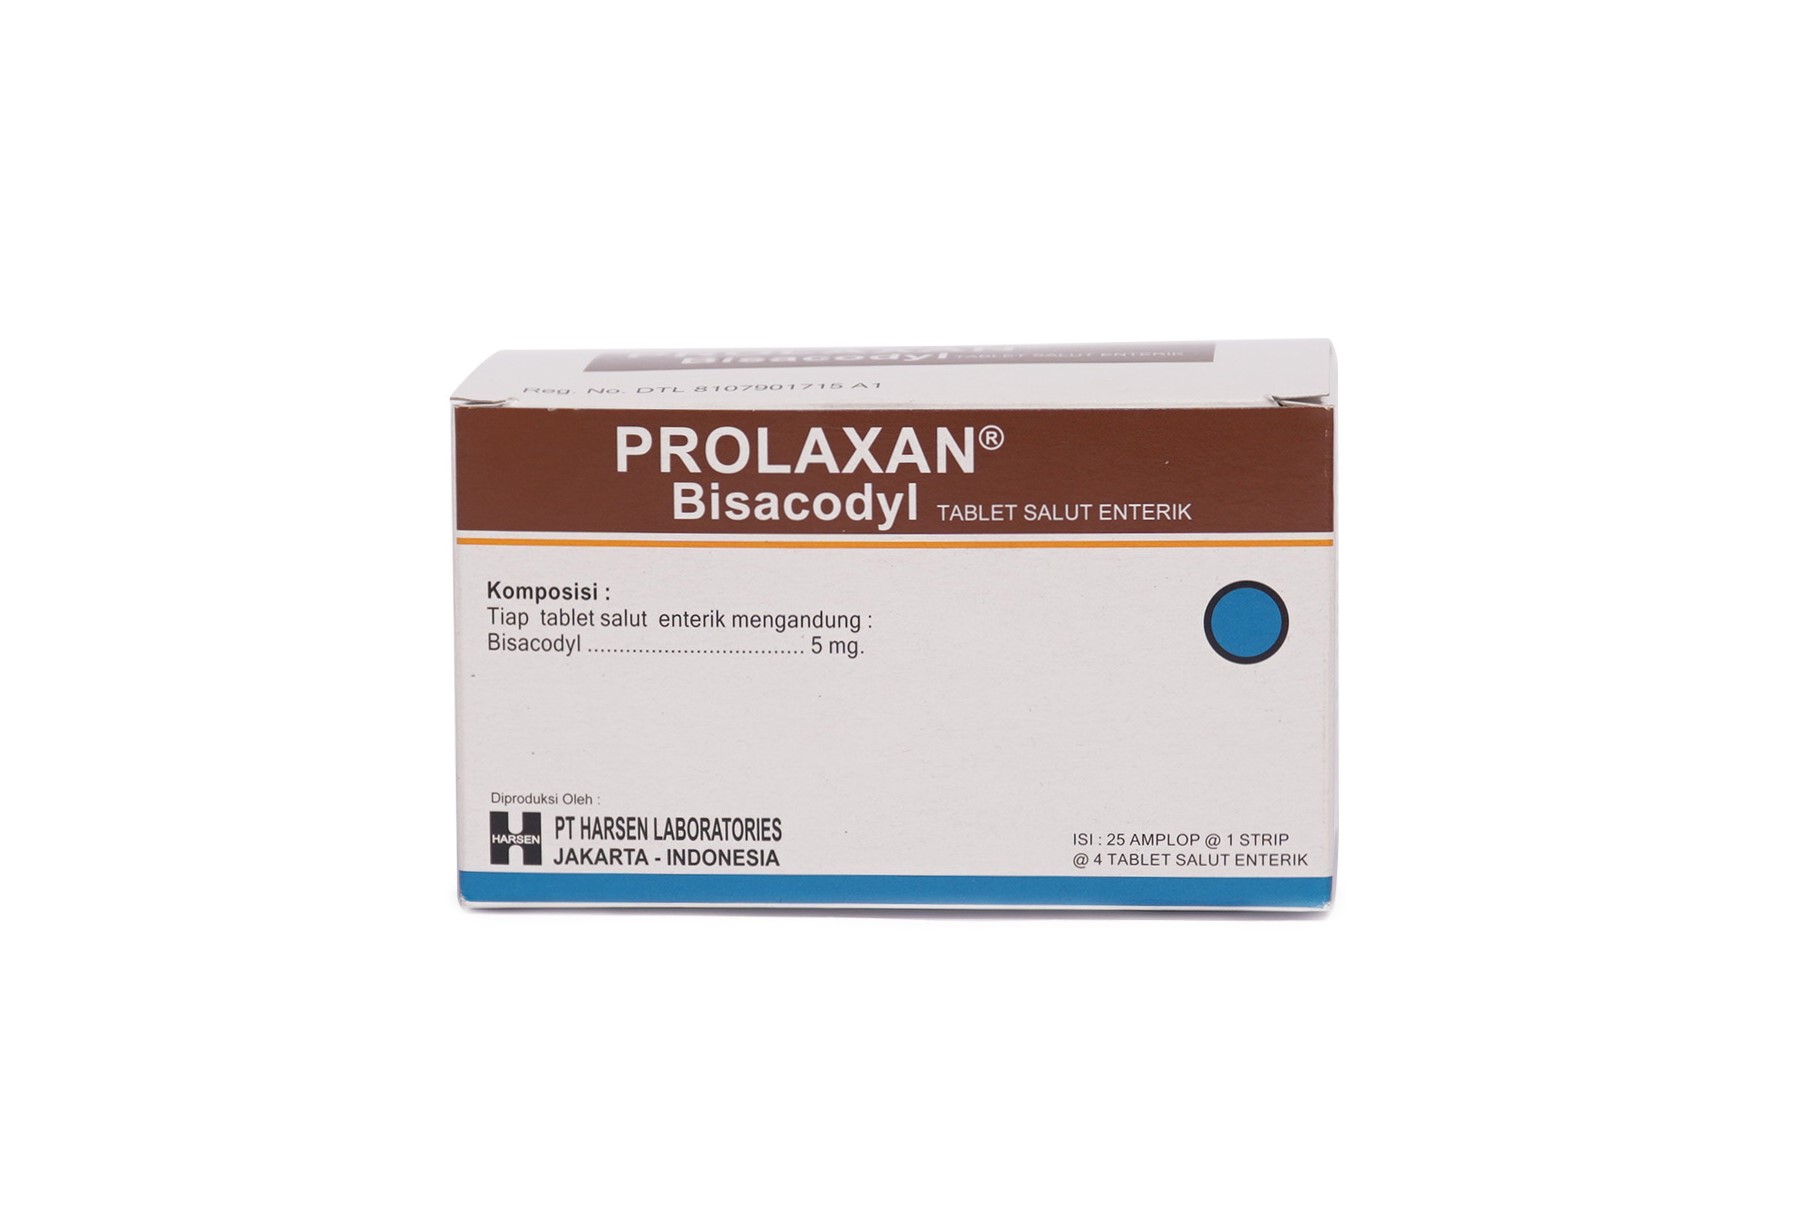 Prolaxan 5 mg